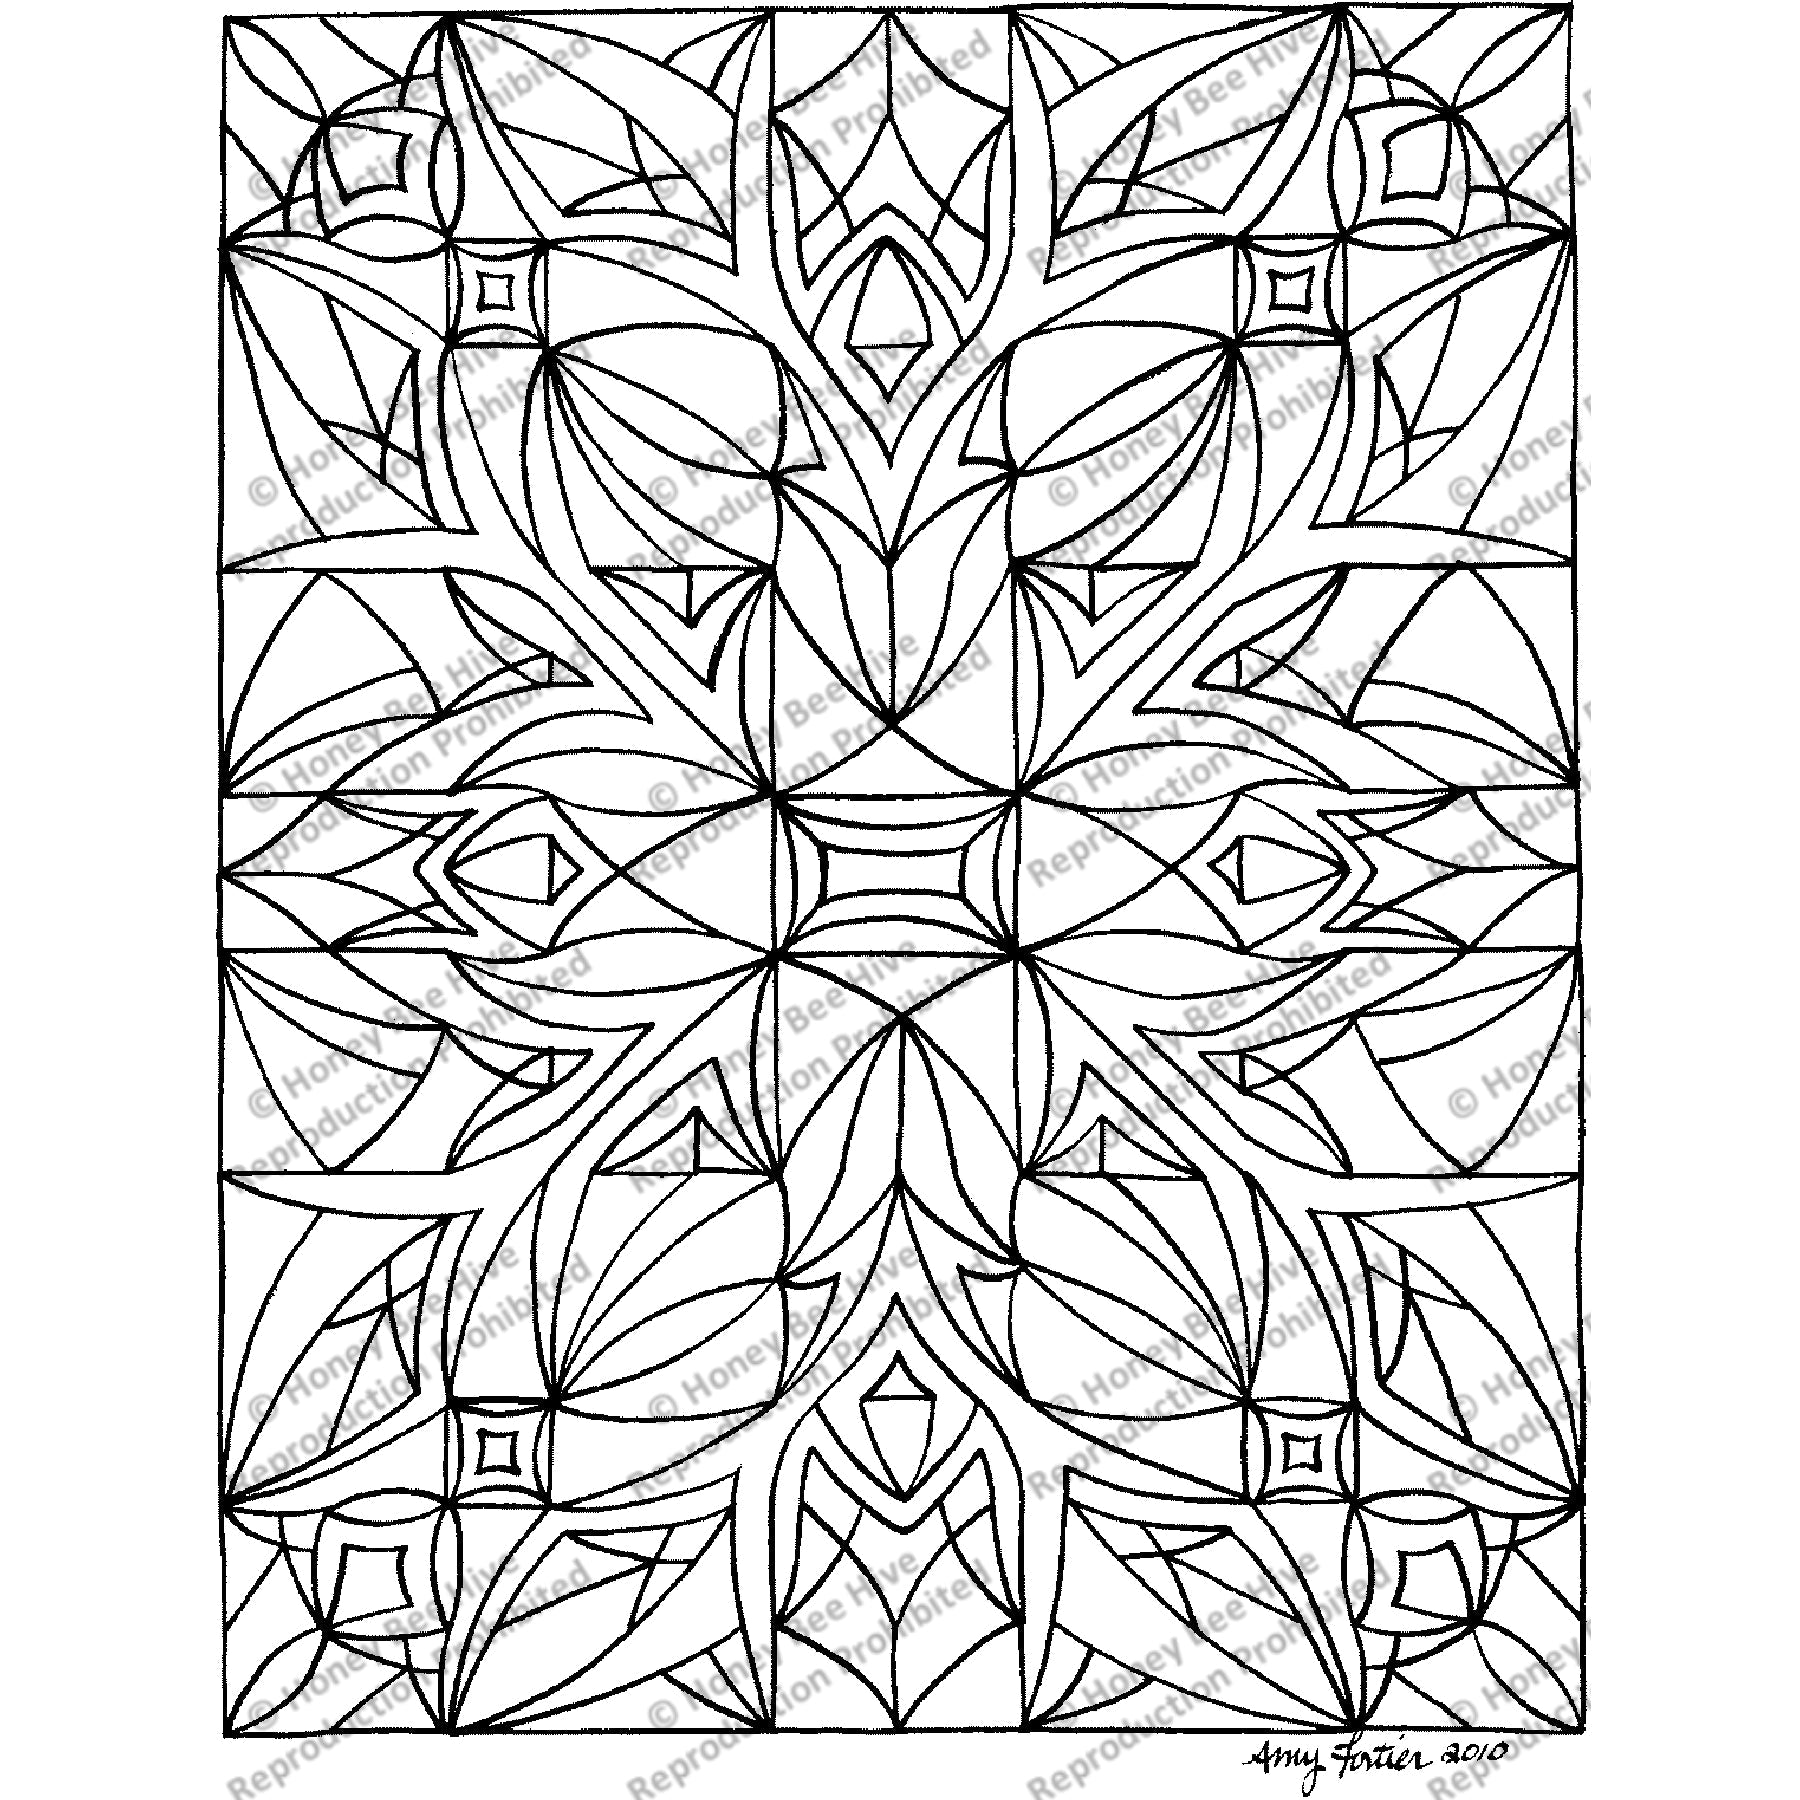 Peony, rug hooking pattern